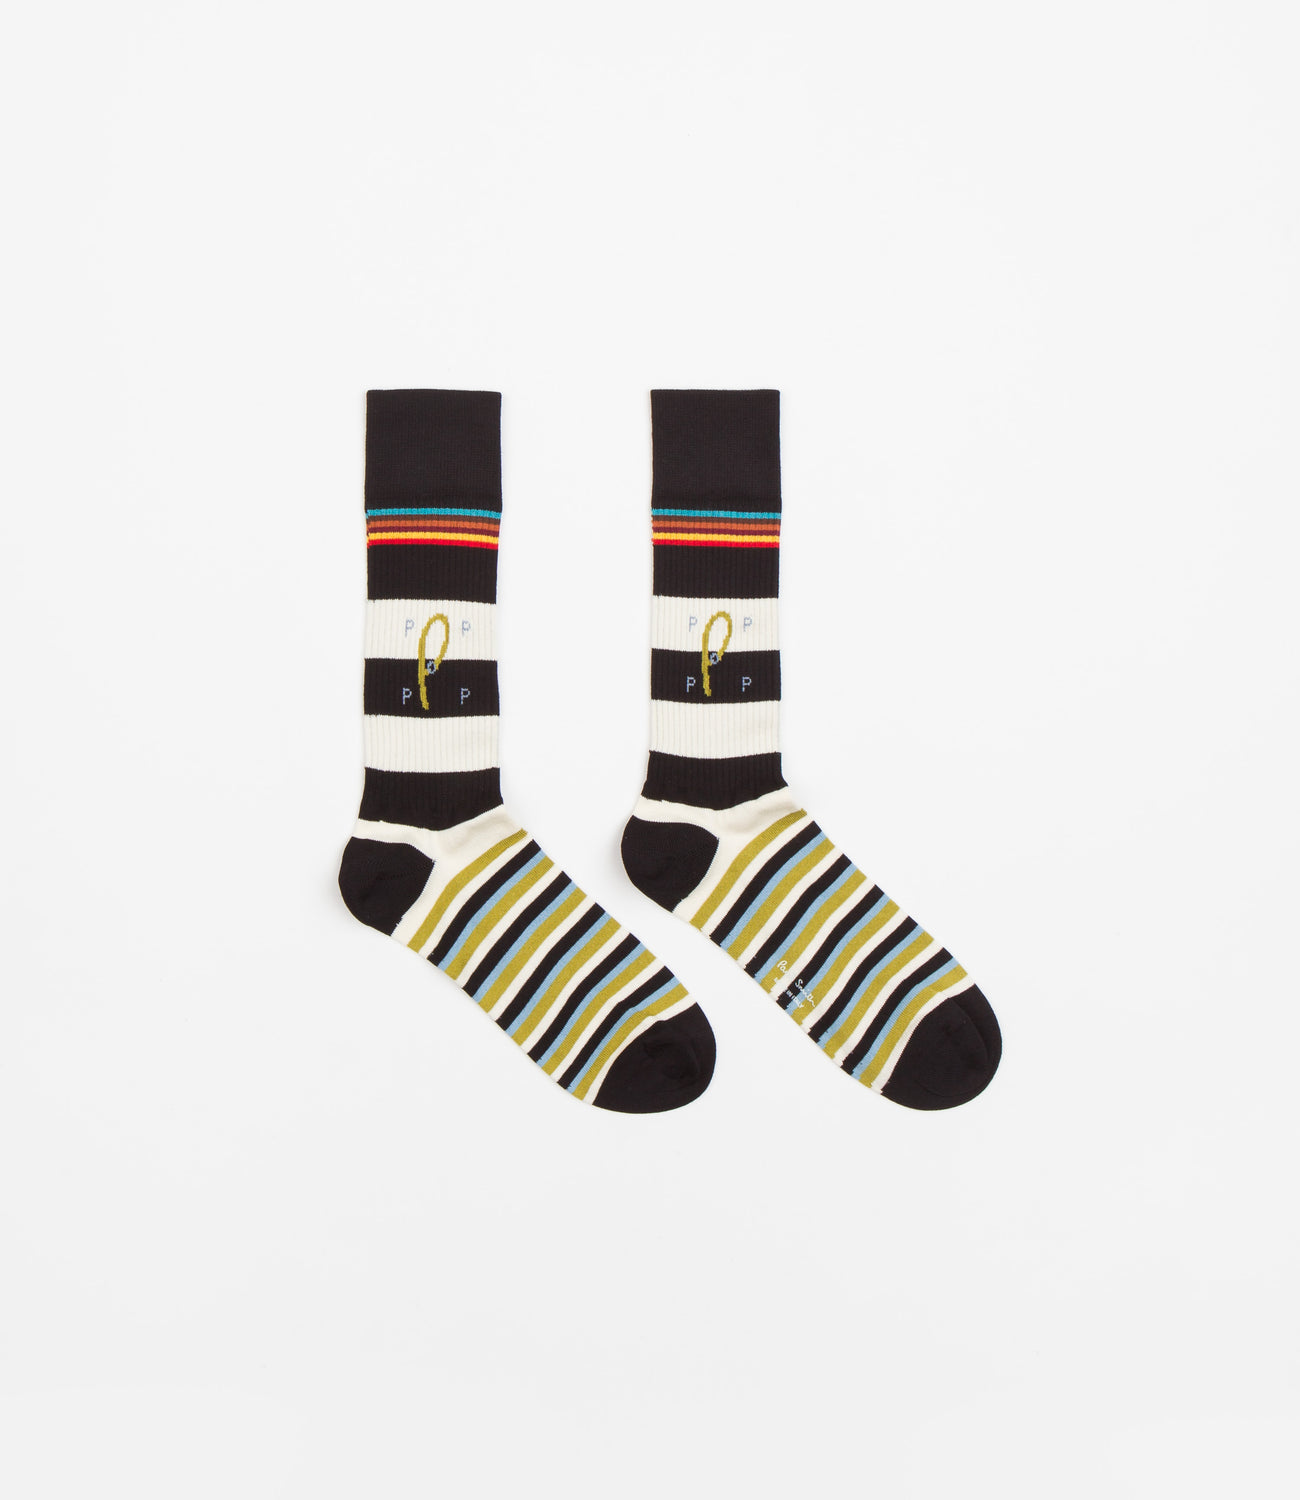 Stan smiths + black with white stripe sport socks